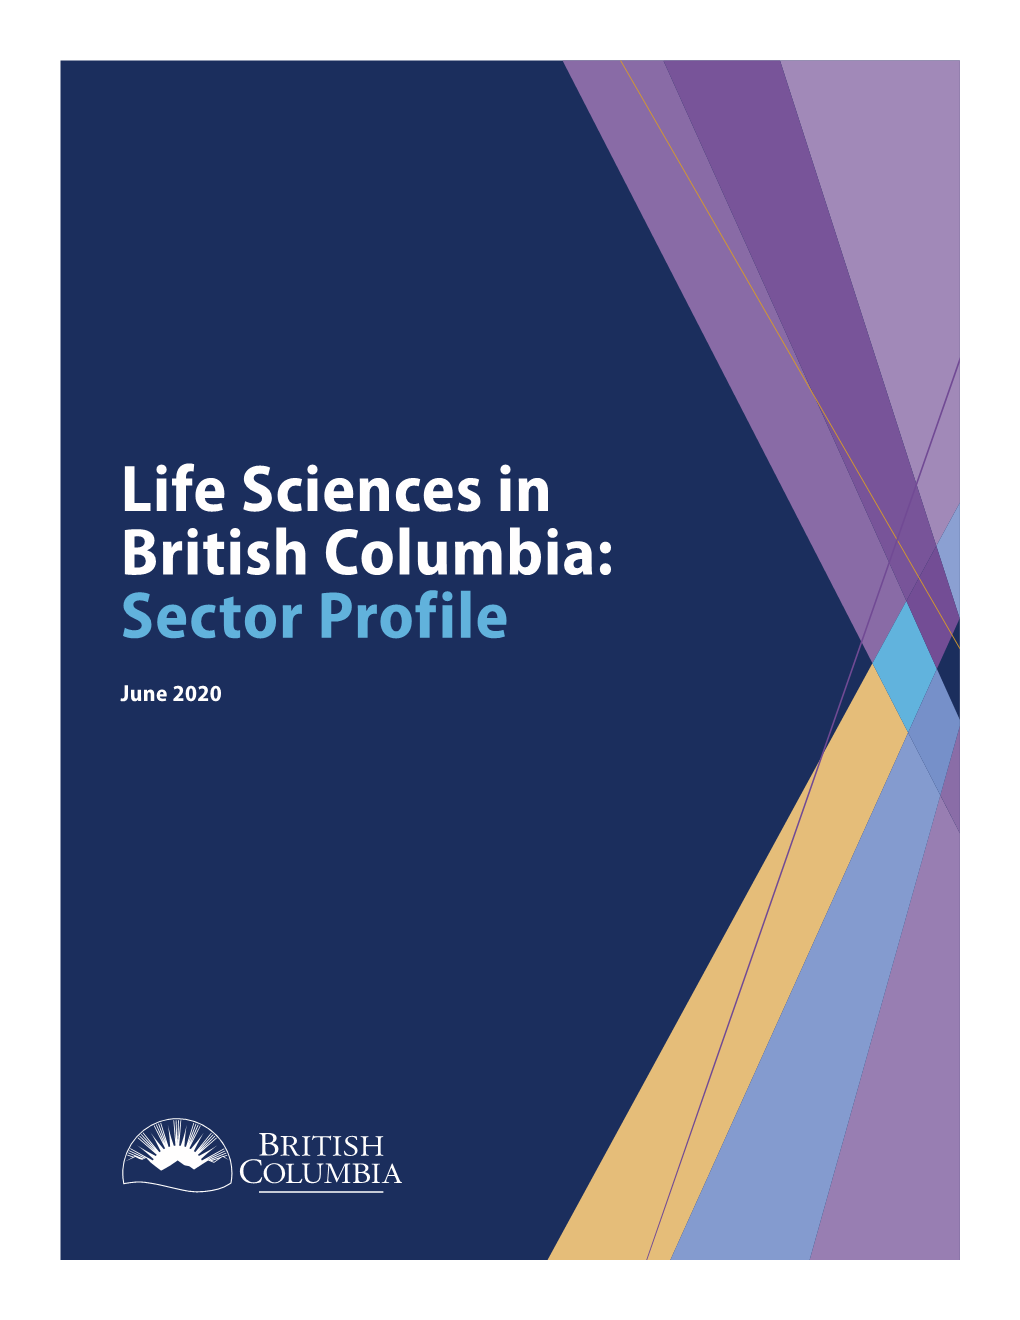 Life Sciences in British Columbia: Sector Profile (June 2020)